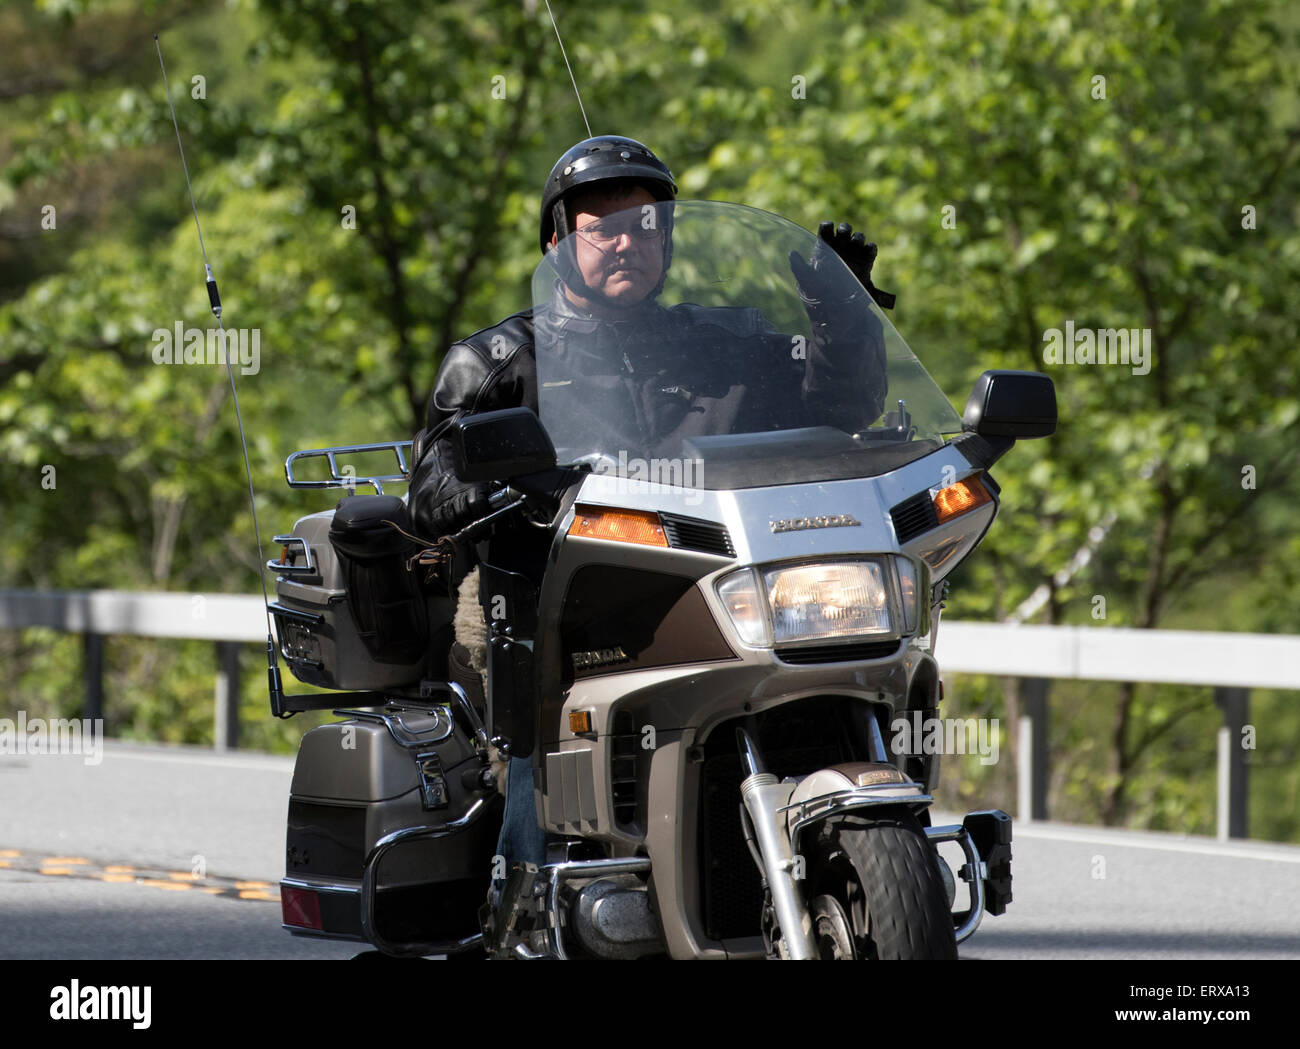 Motociclo Moto Rider sventolando la fotocamera a. Foto Stock